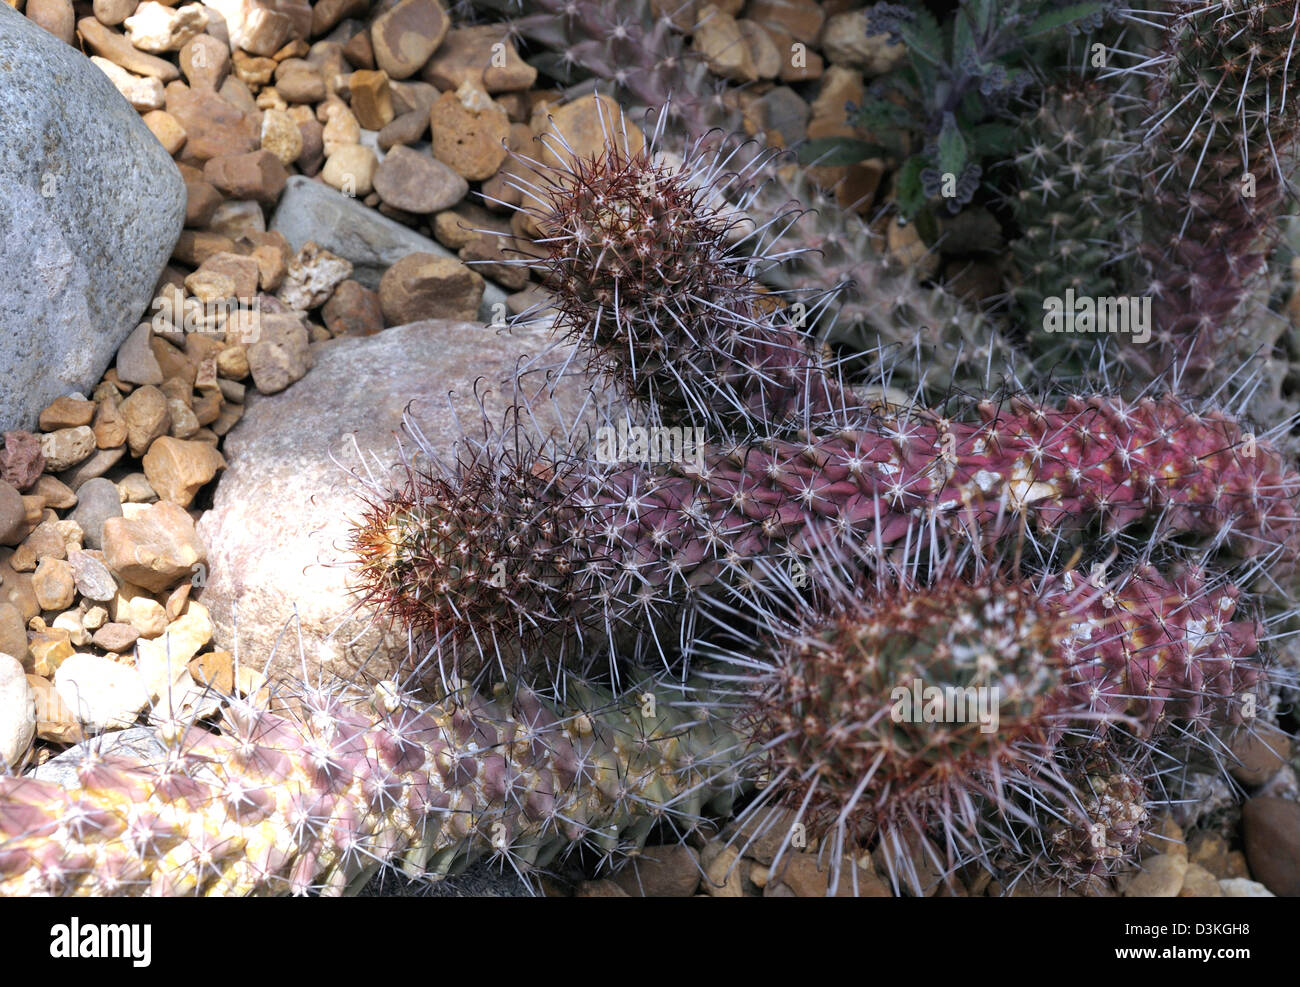 The cochemiea cactus plant Stock Photo